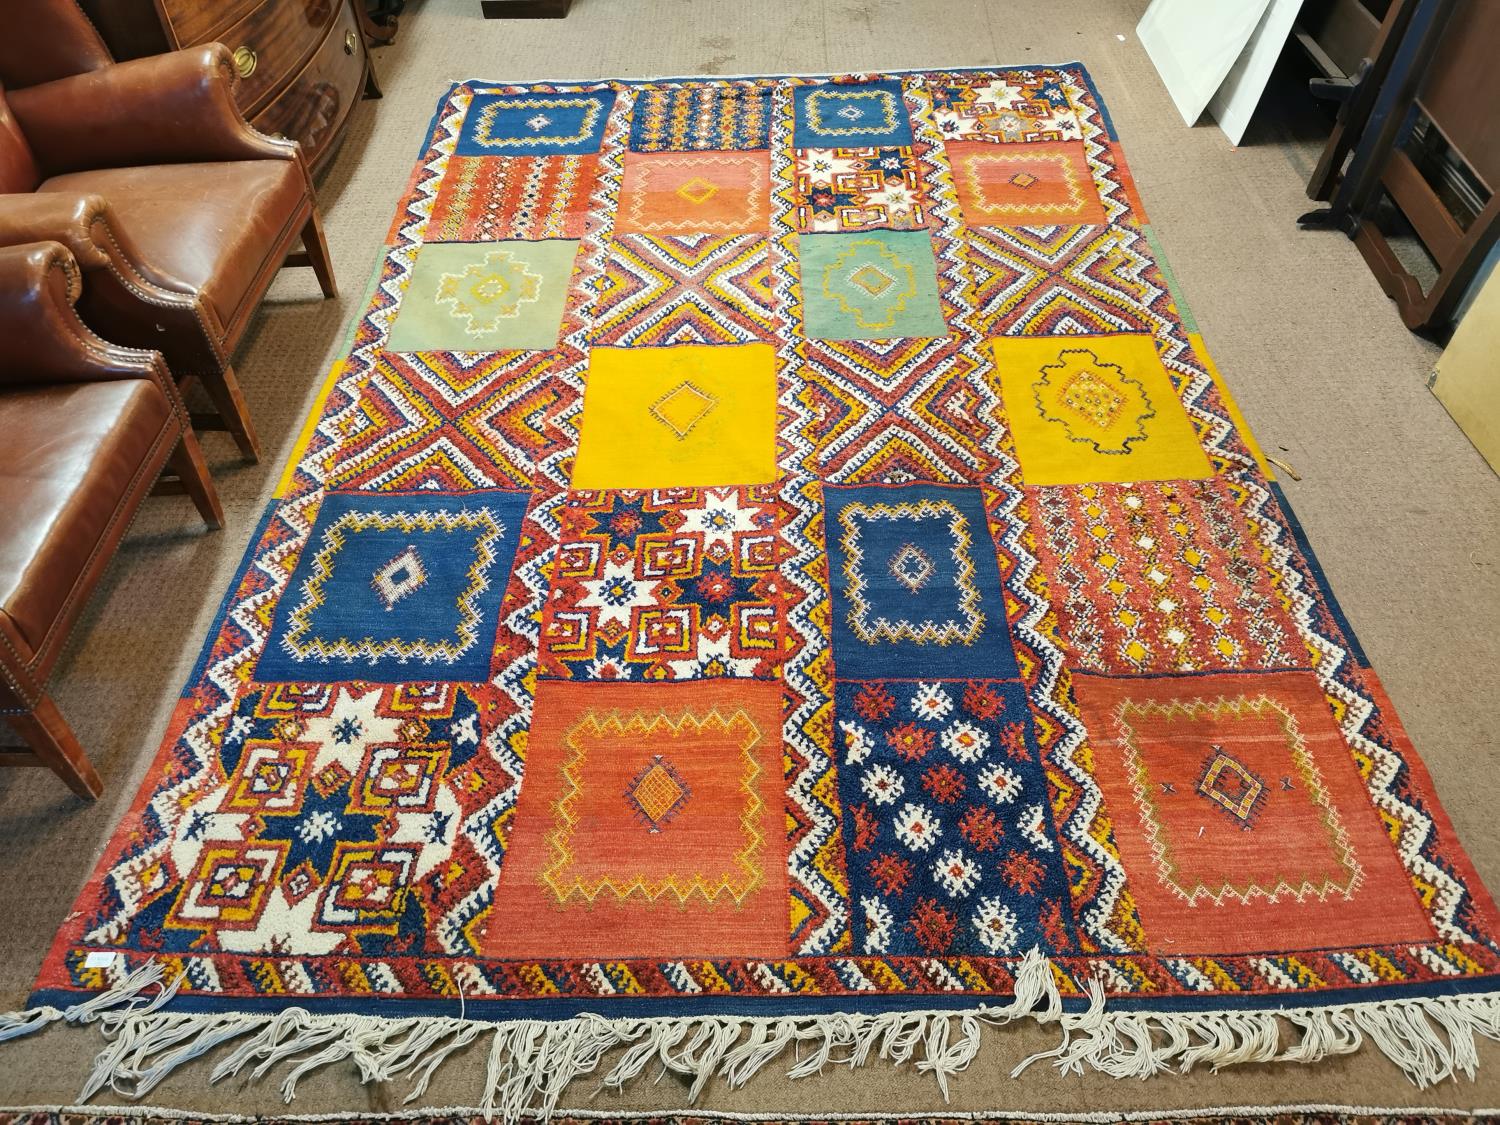 Decorative Persian carpet square.